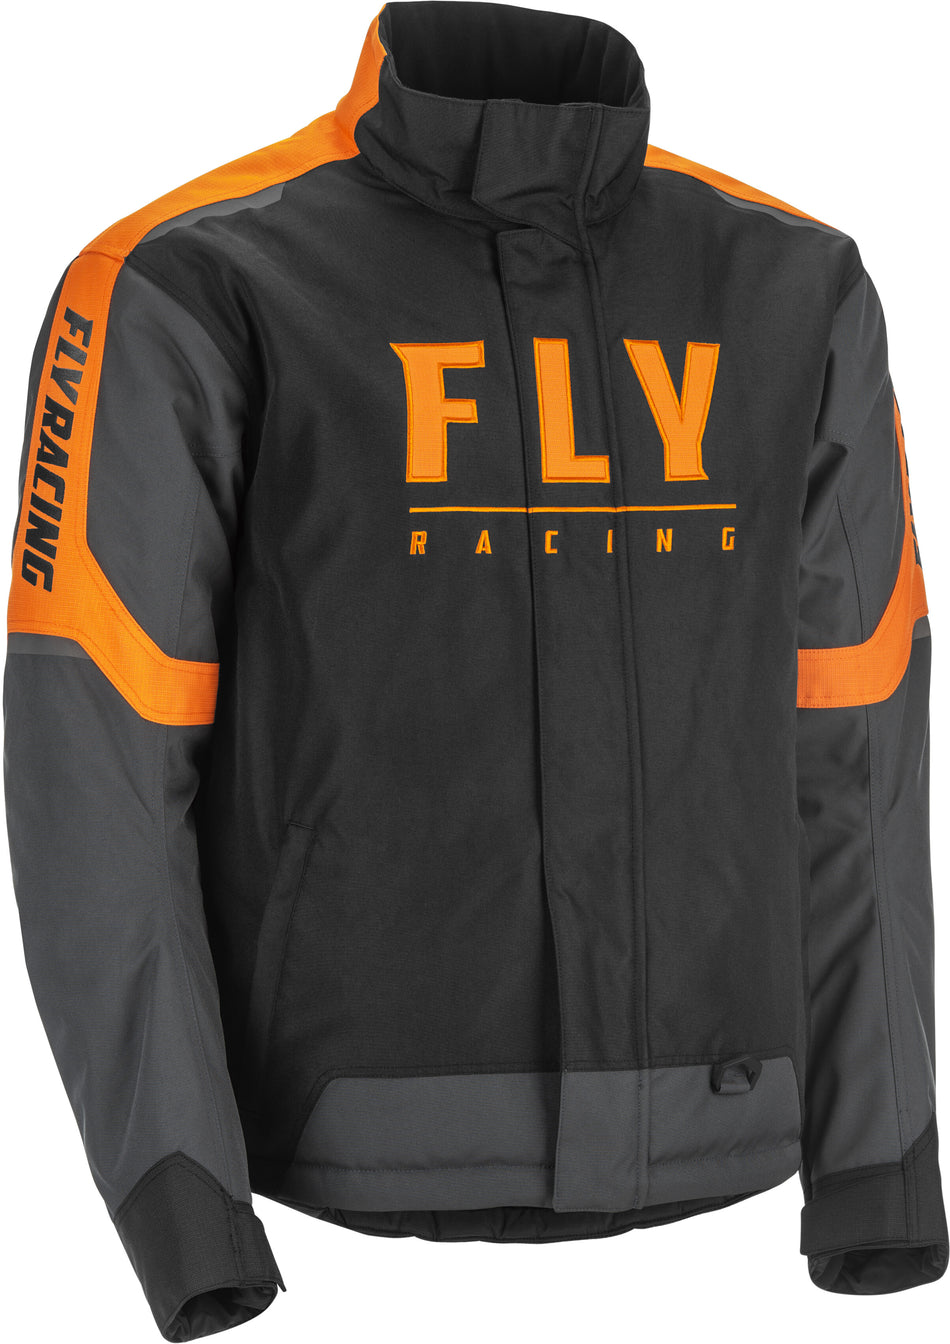 FLY RACING Outpost Jacket Black/Grey/Orange Sm 470-4142S